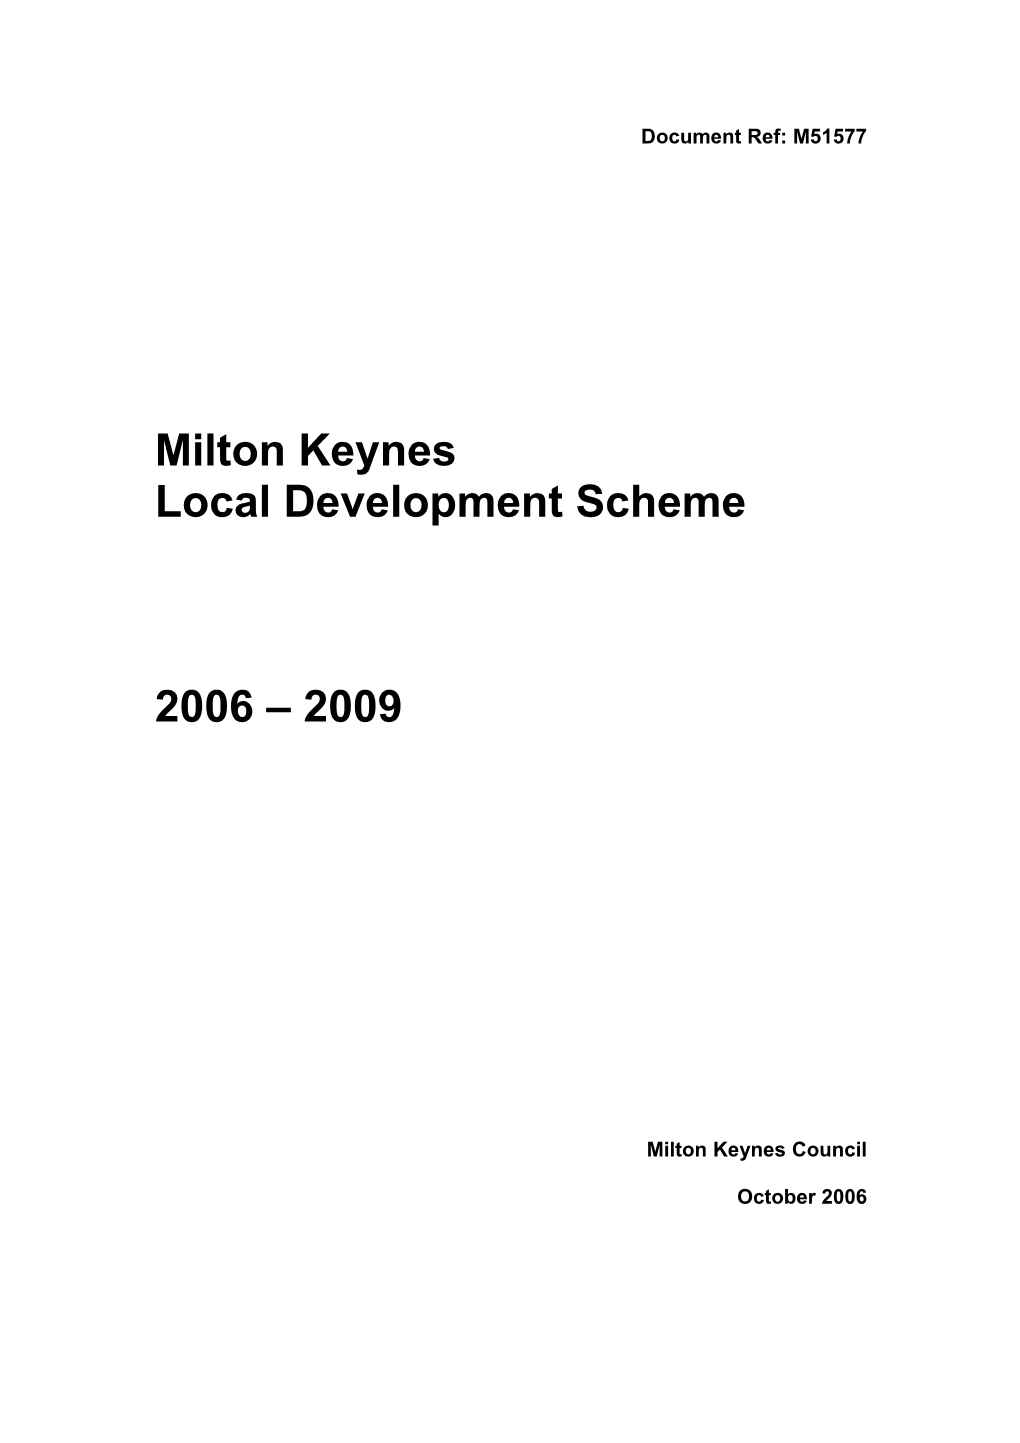 Milton Keynes Draft Local Development Scheme